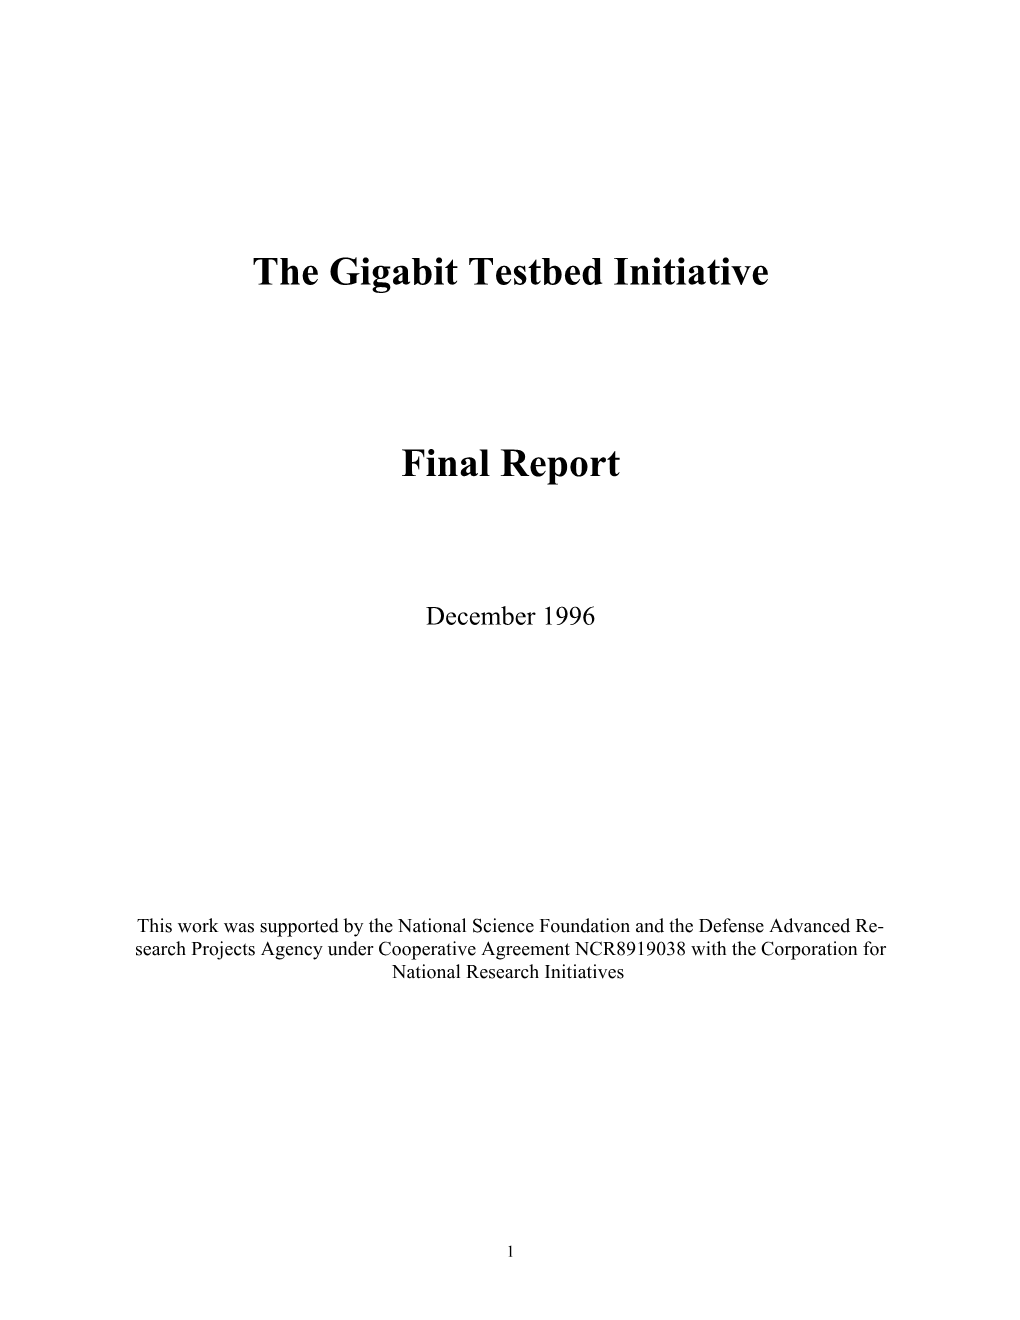 Gigabit Testbeds Final Report